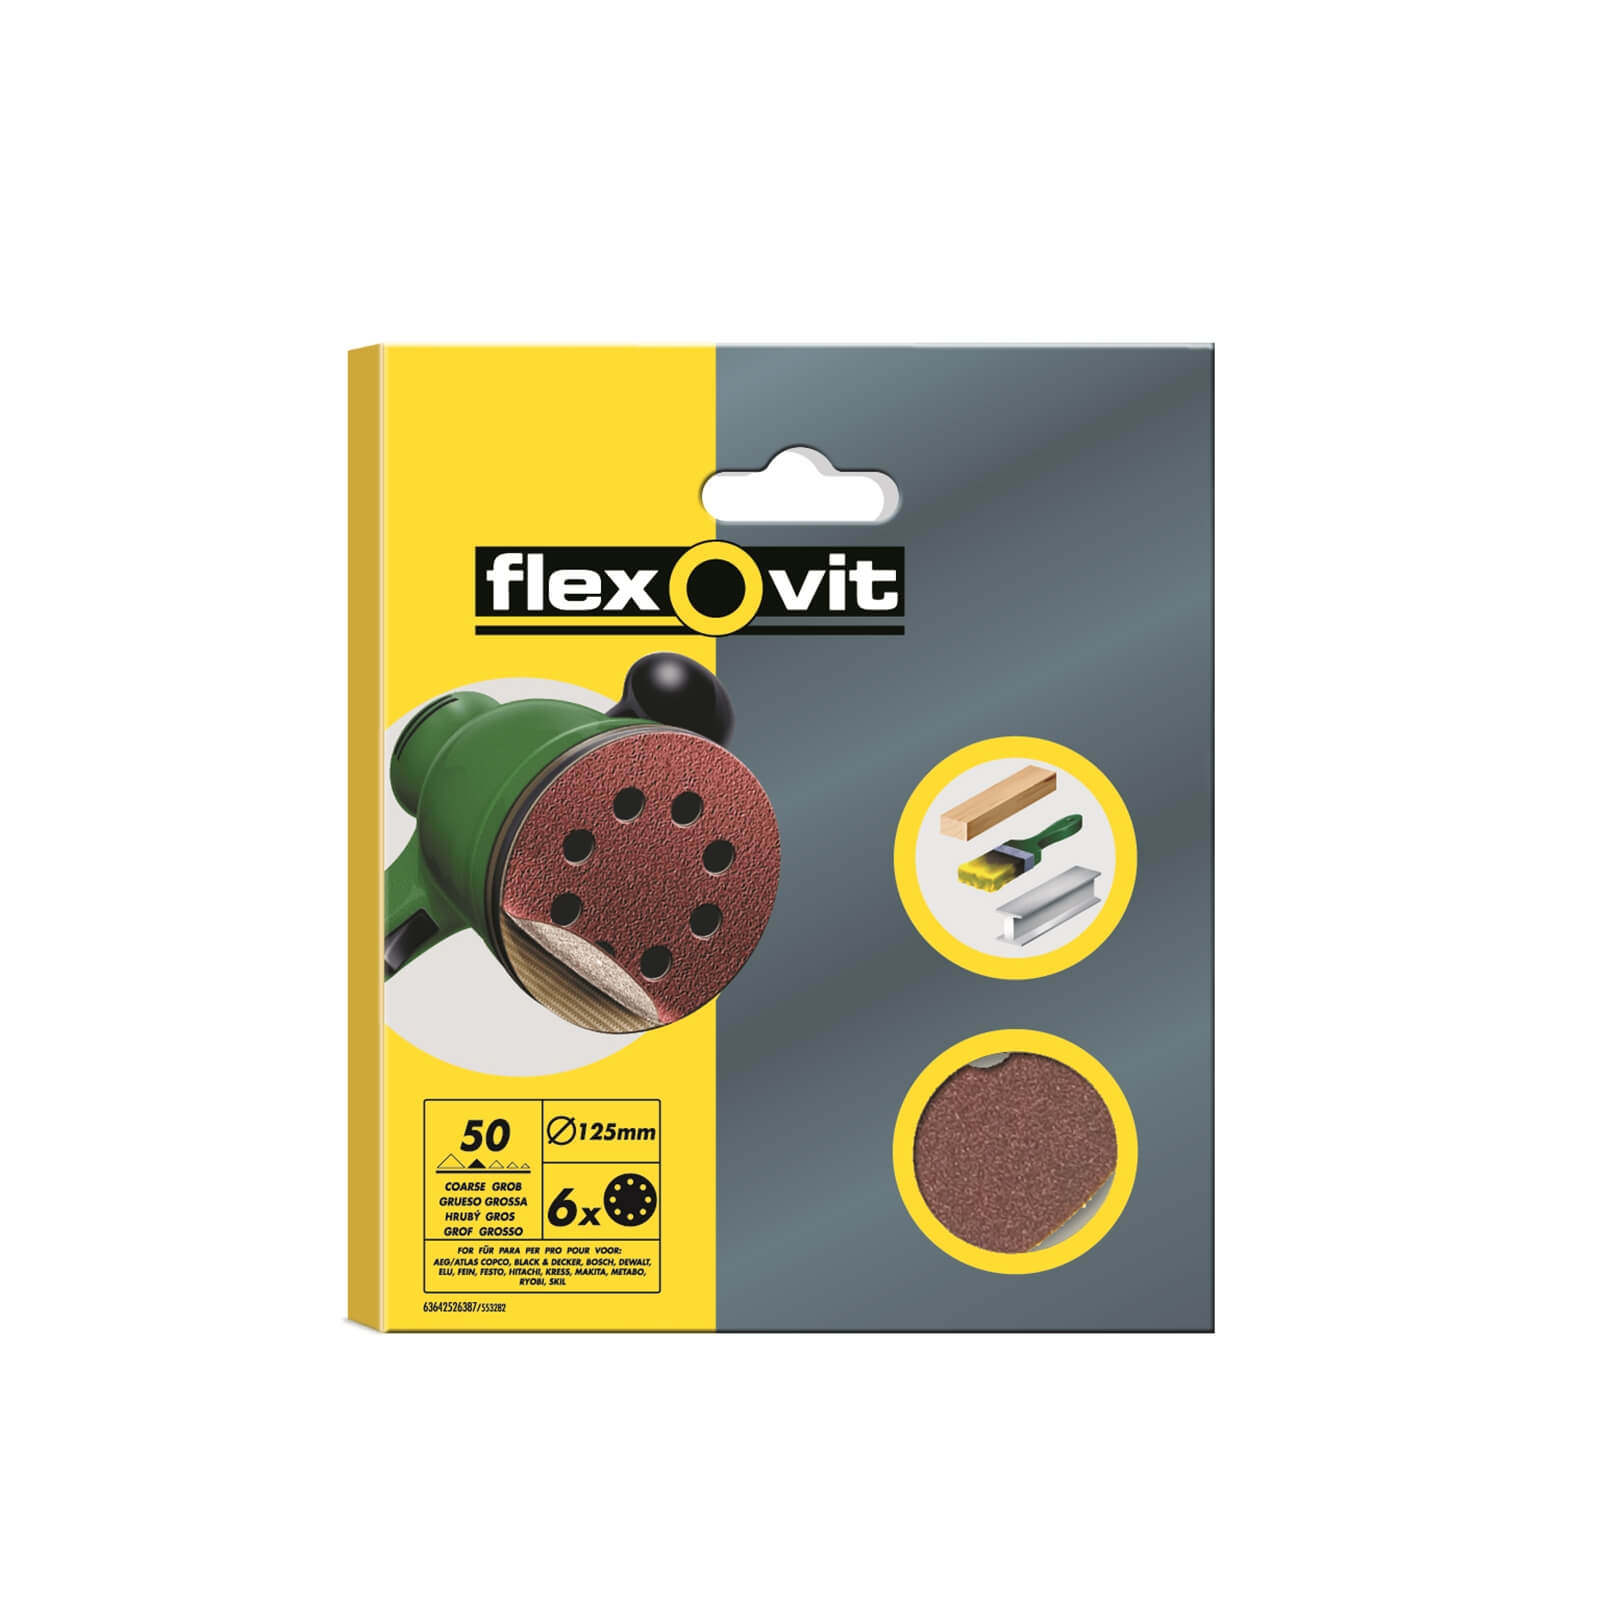 Flexovit PTA 125mm Eccentric Discs - 50 Grit